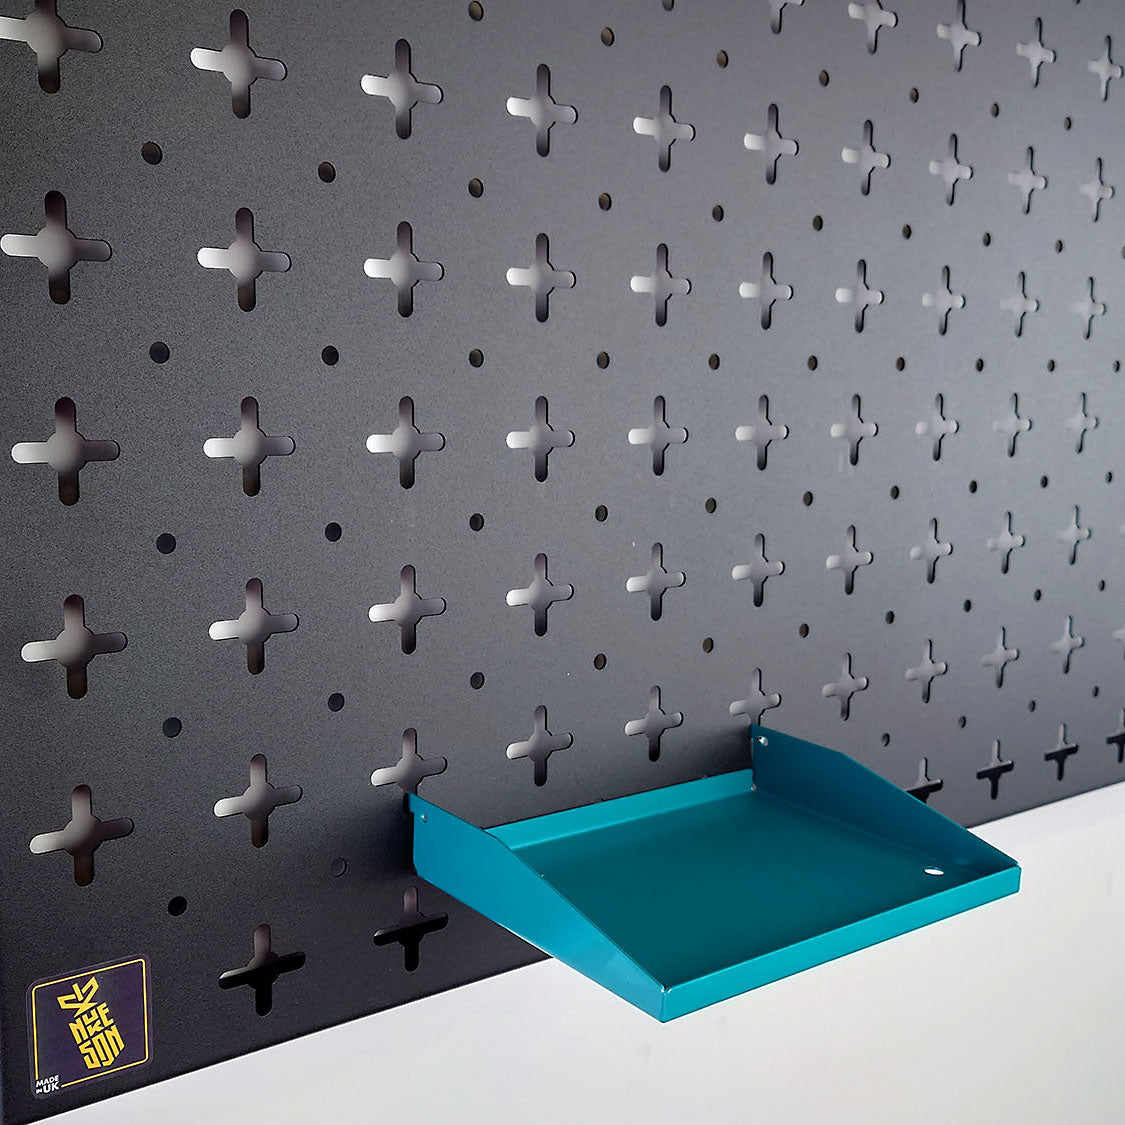 Nukeson Tool Wall - Universal Shelf Attachment (177 x 135mm)